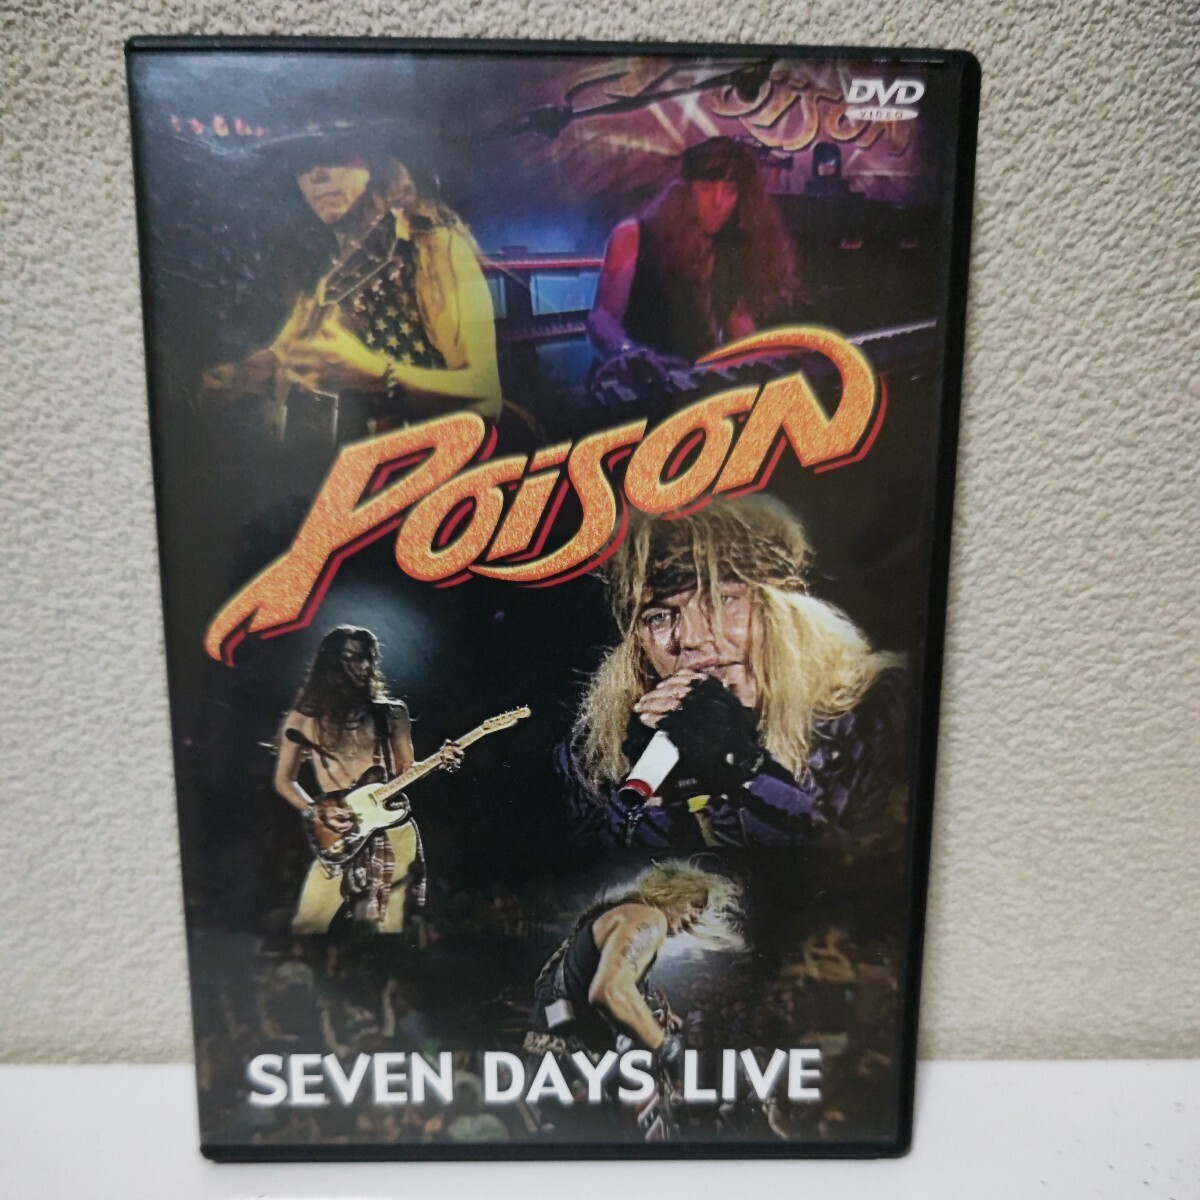 POISON/Seven Days Live зарубежная запись DVDpoizn